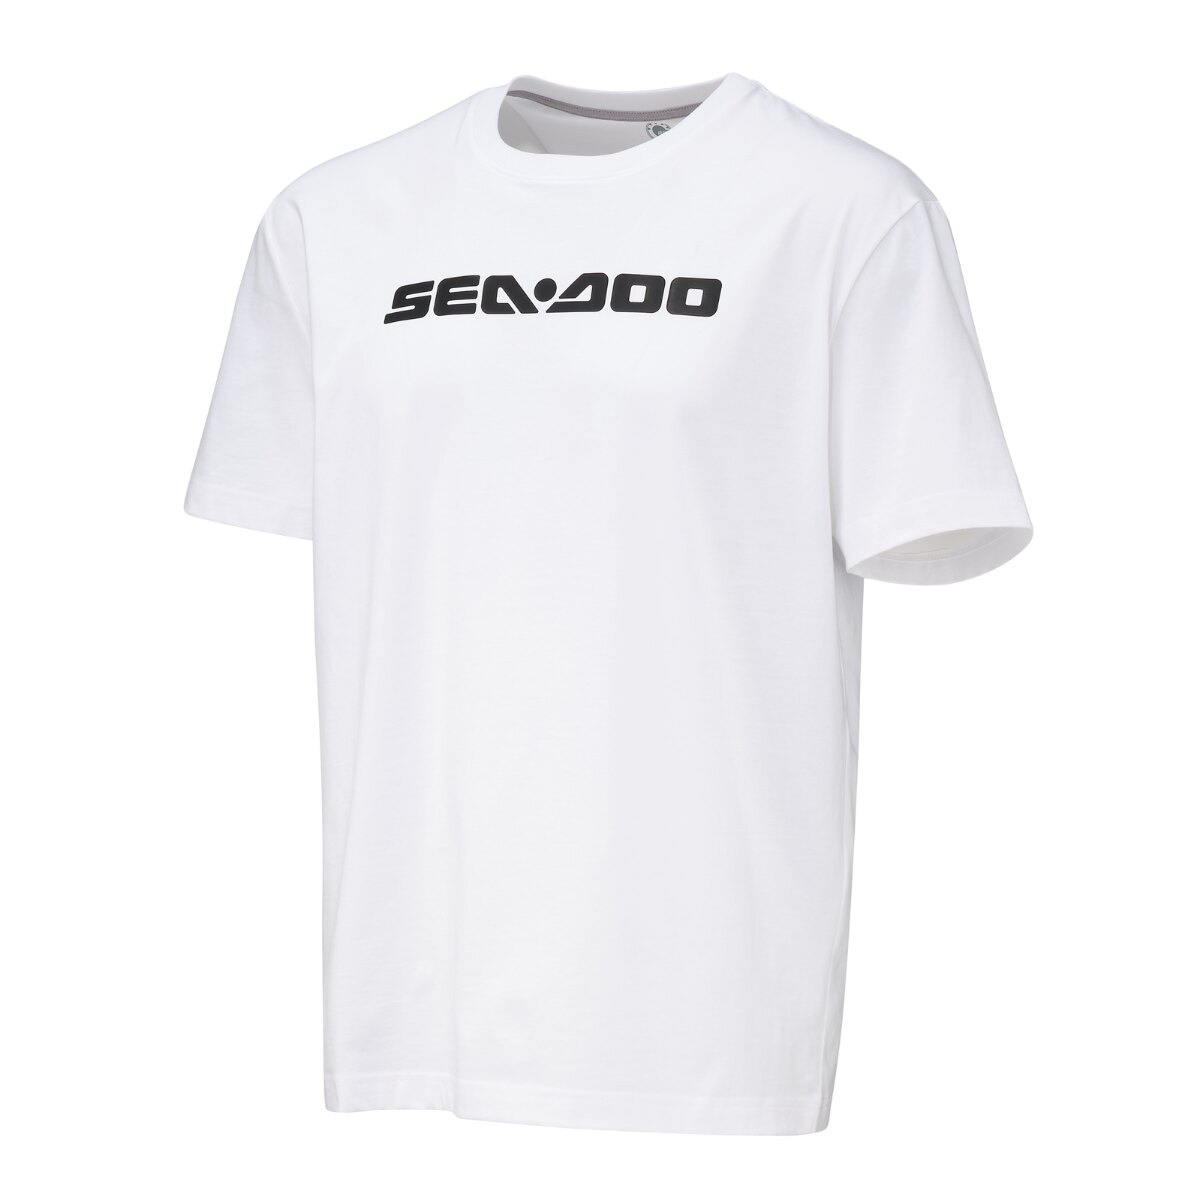 Men's Sea Doo Signature T Shirt S White